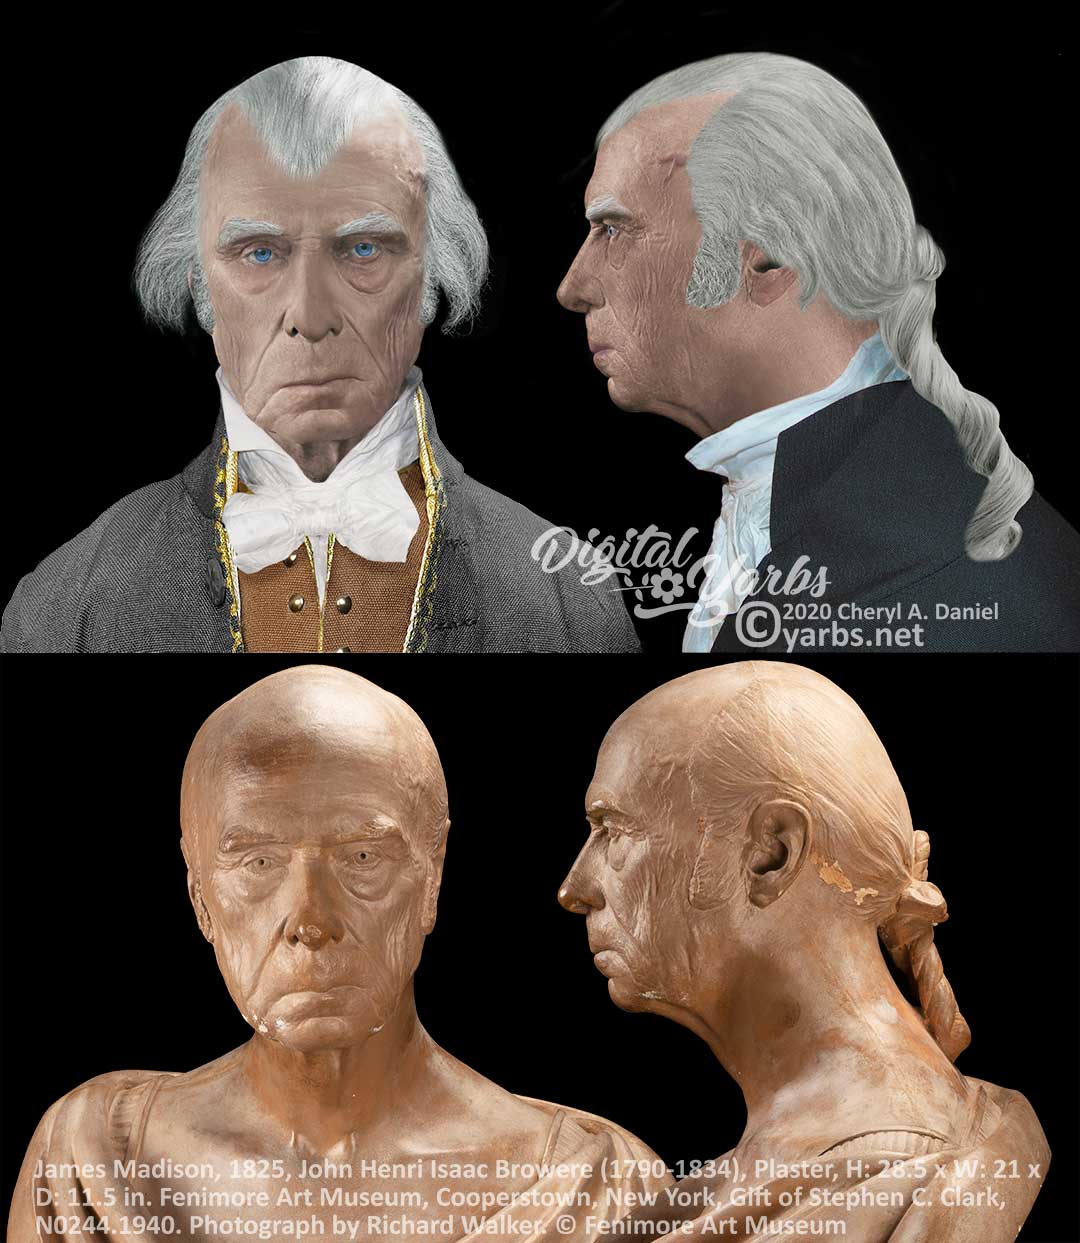 James Madison life mask facial reconstructions.